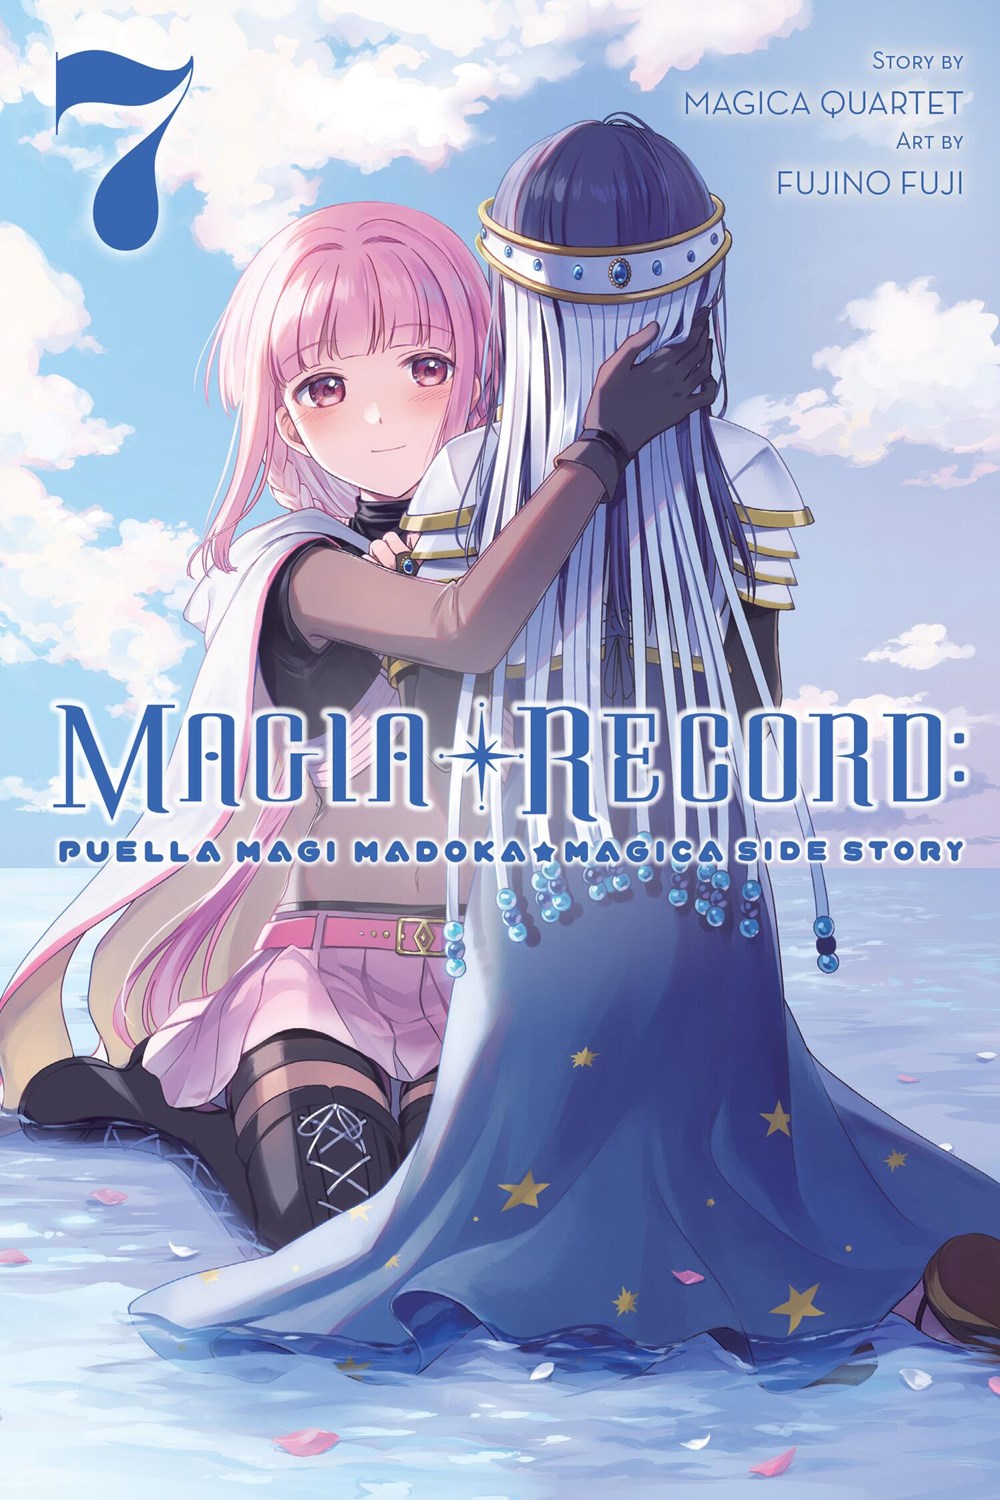 Magia Record Puella Magi Madoka Magica Side Story Manga Volume 7 image count 0